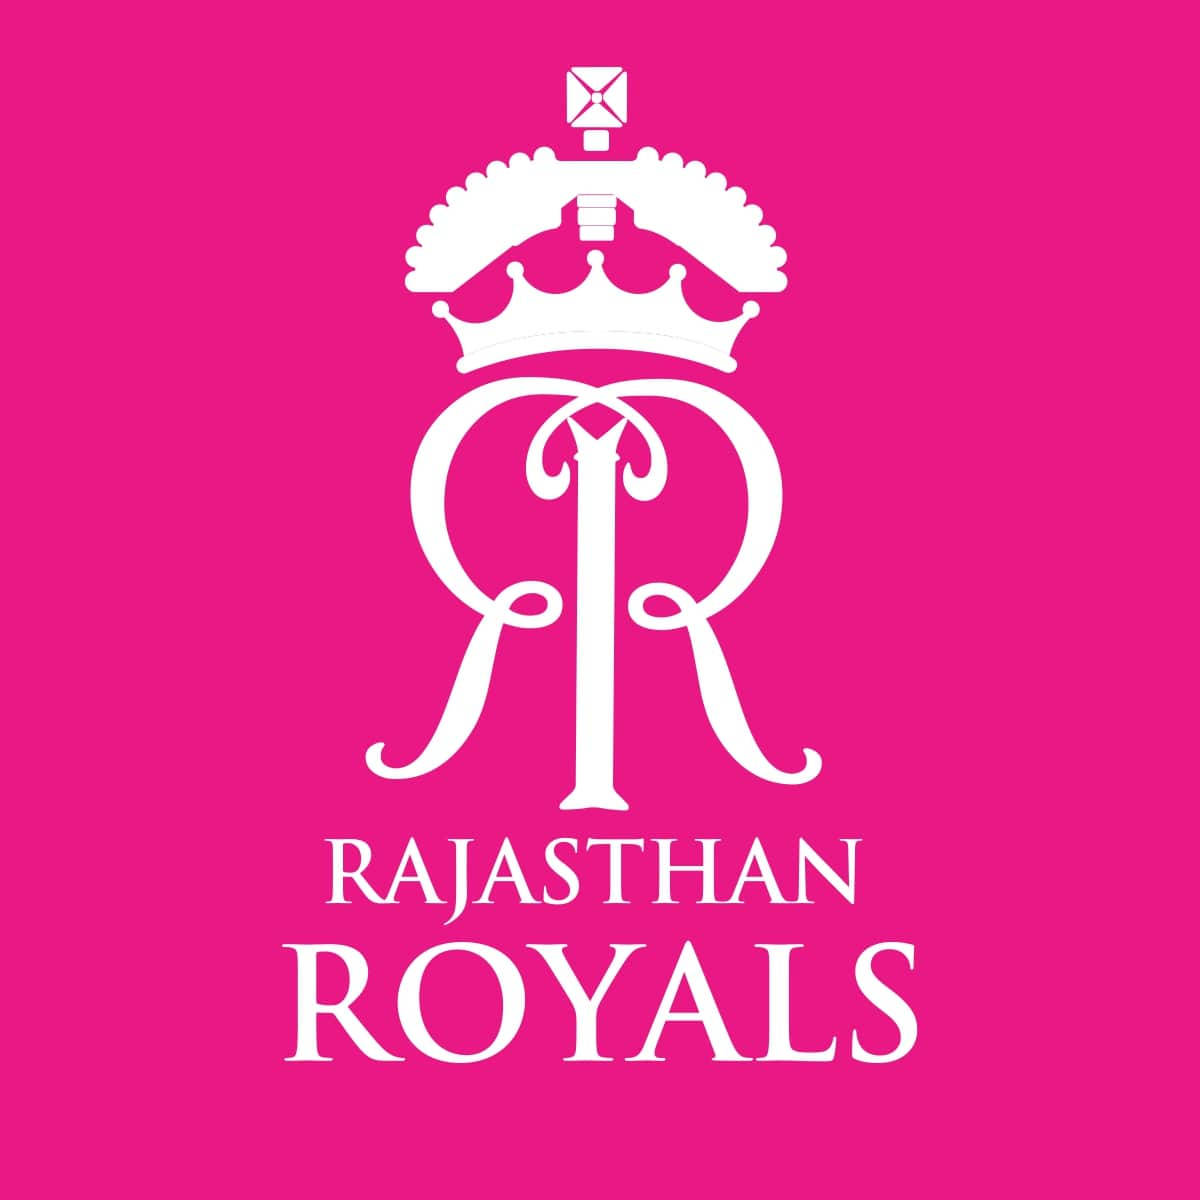 Rajasthan Royals Pink Background Wallpaper